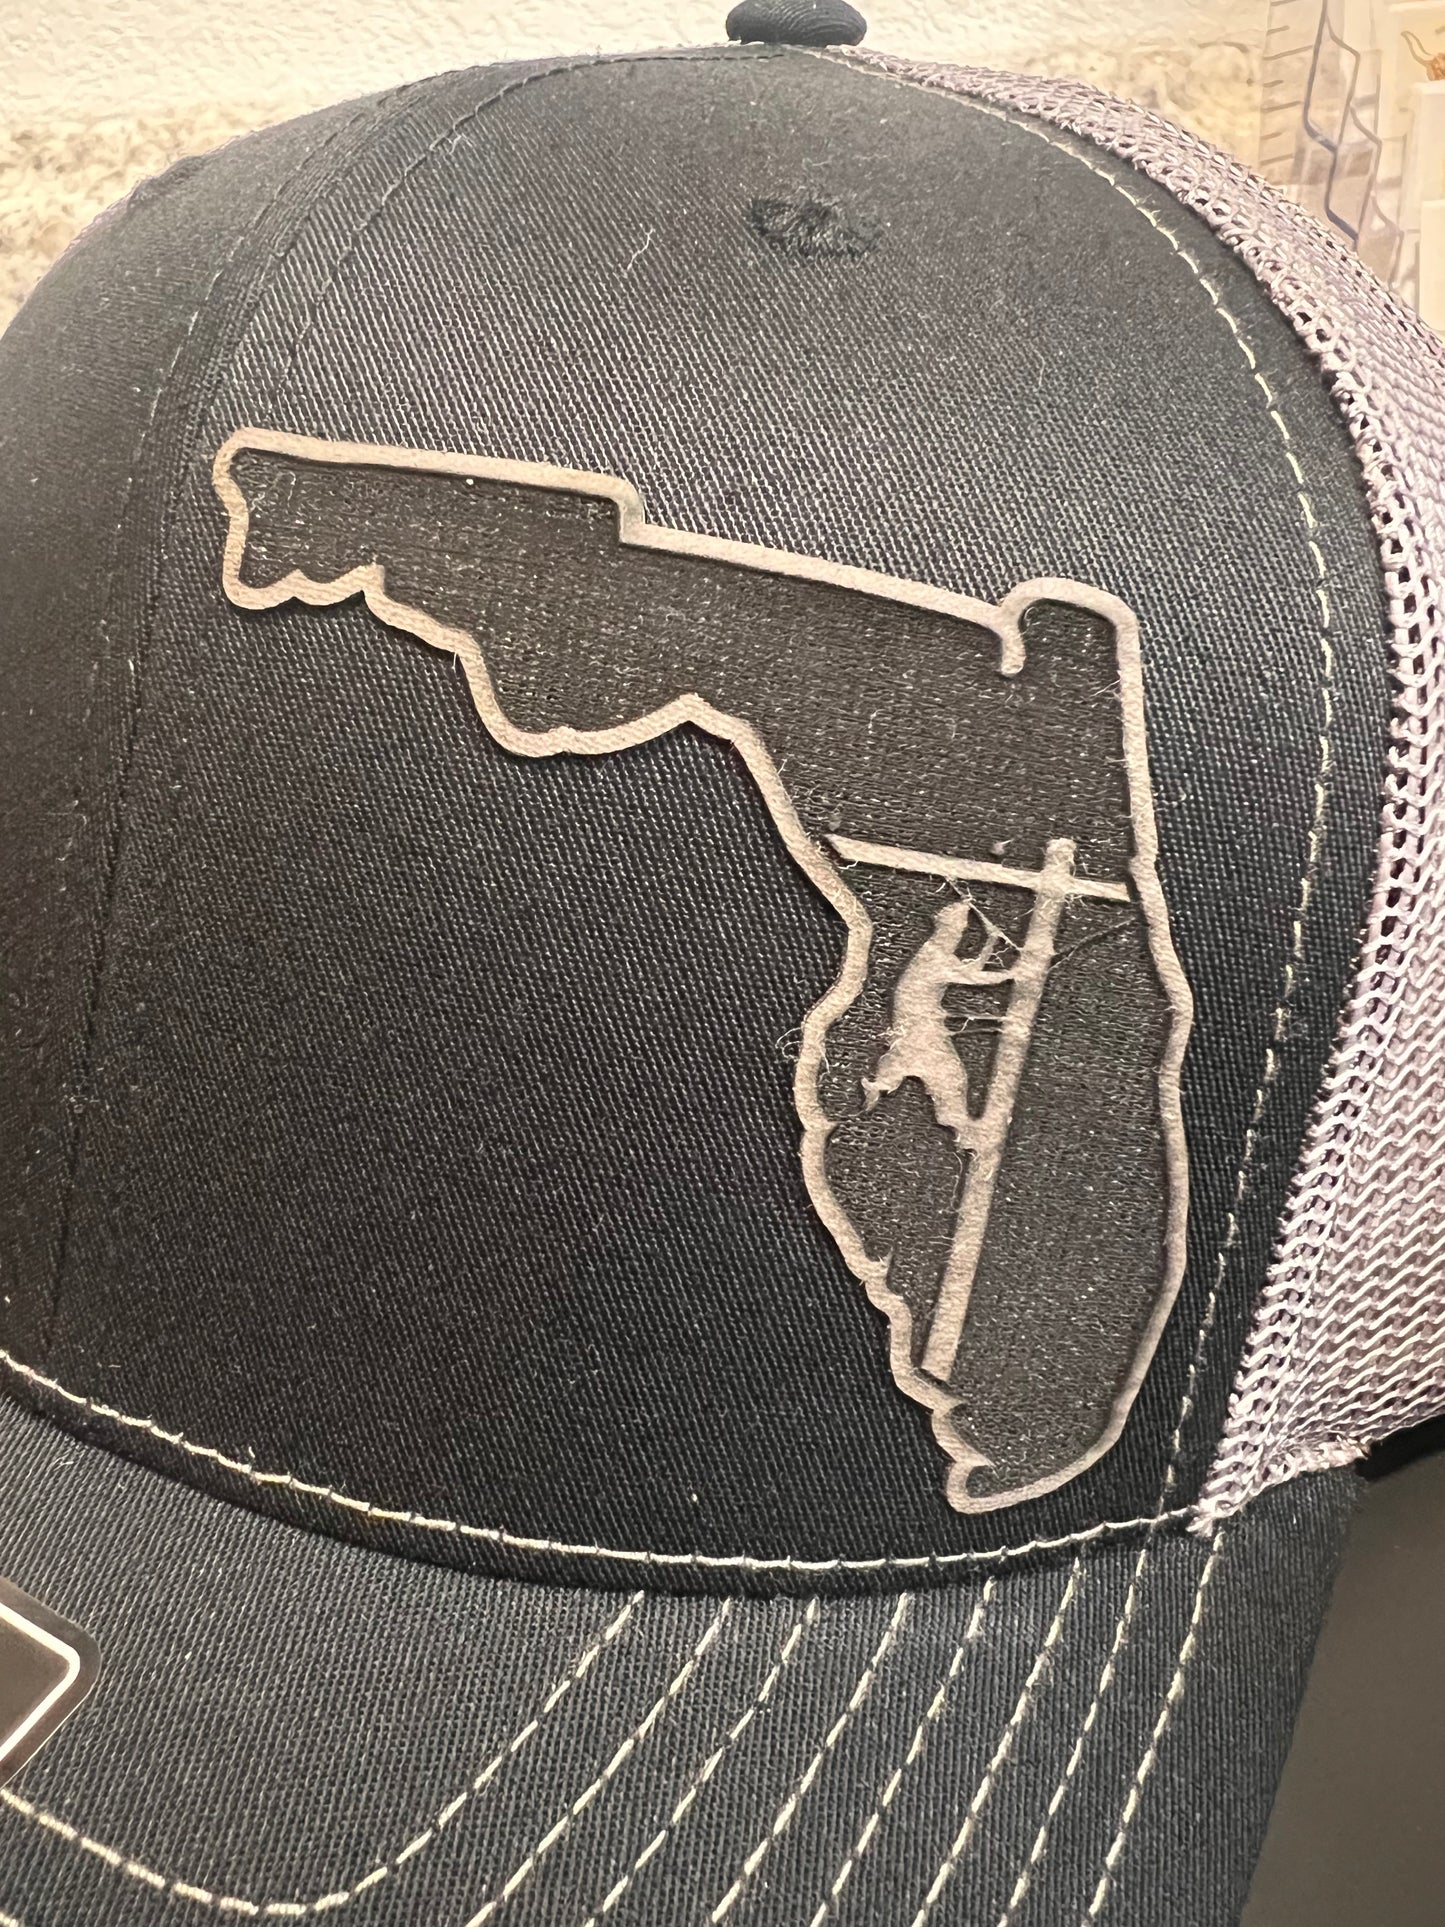 Lineman Florida Hat